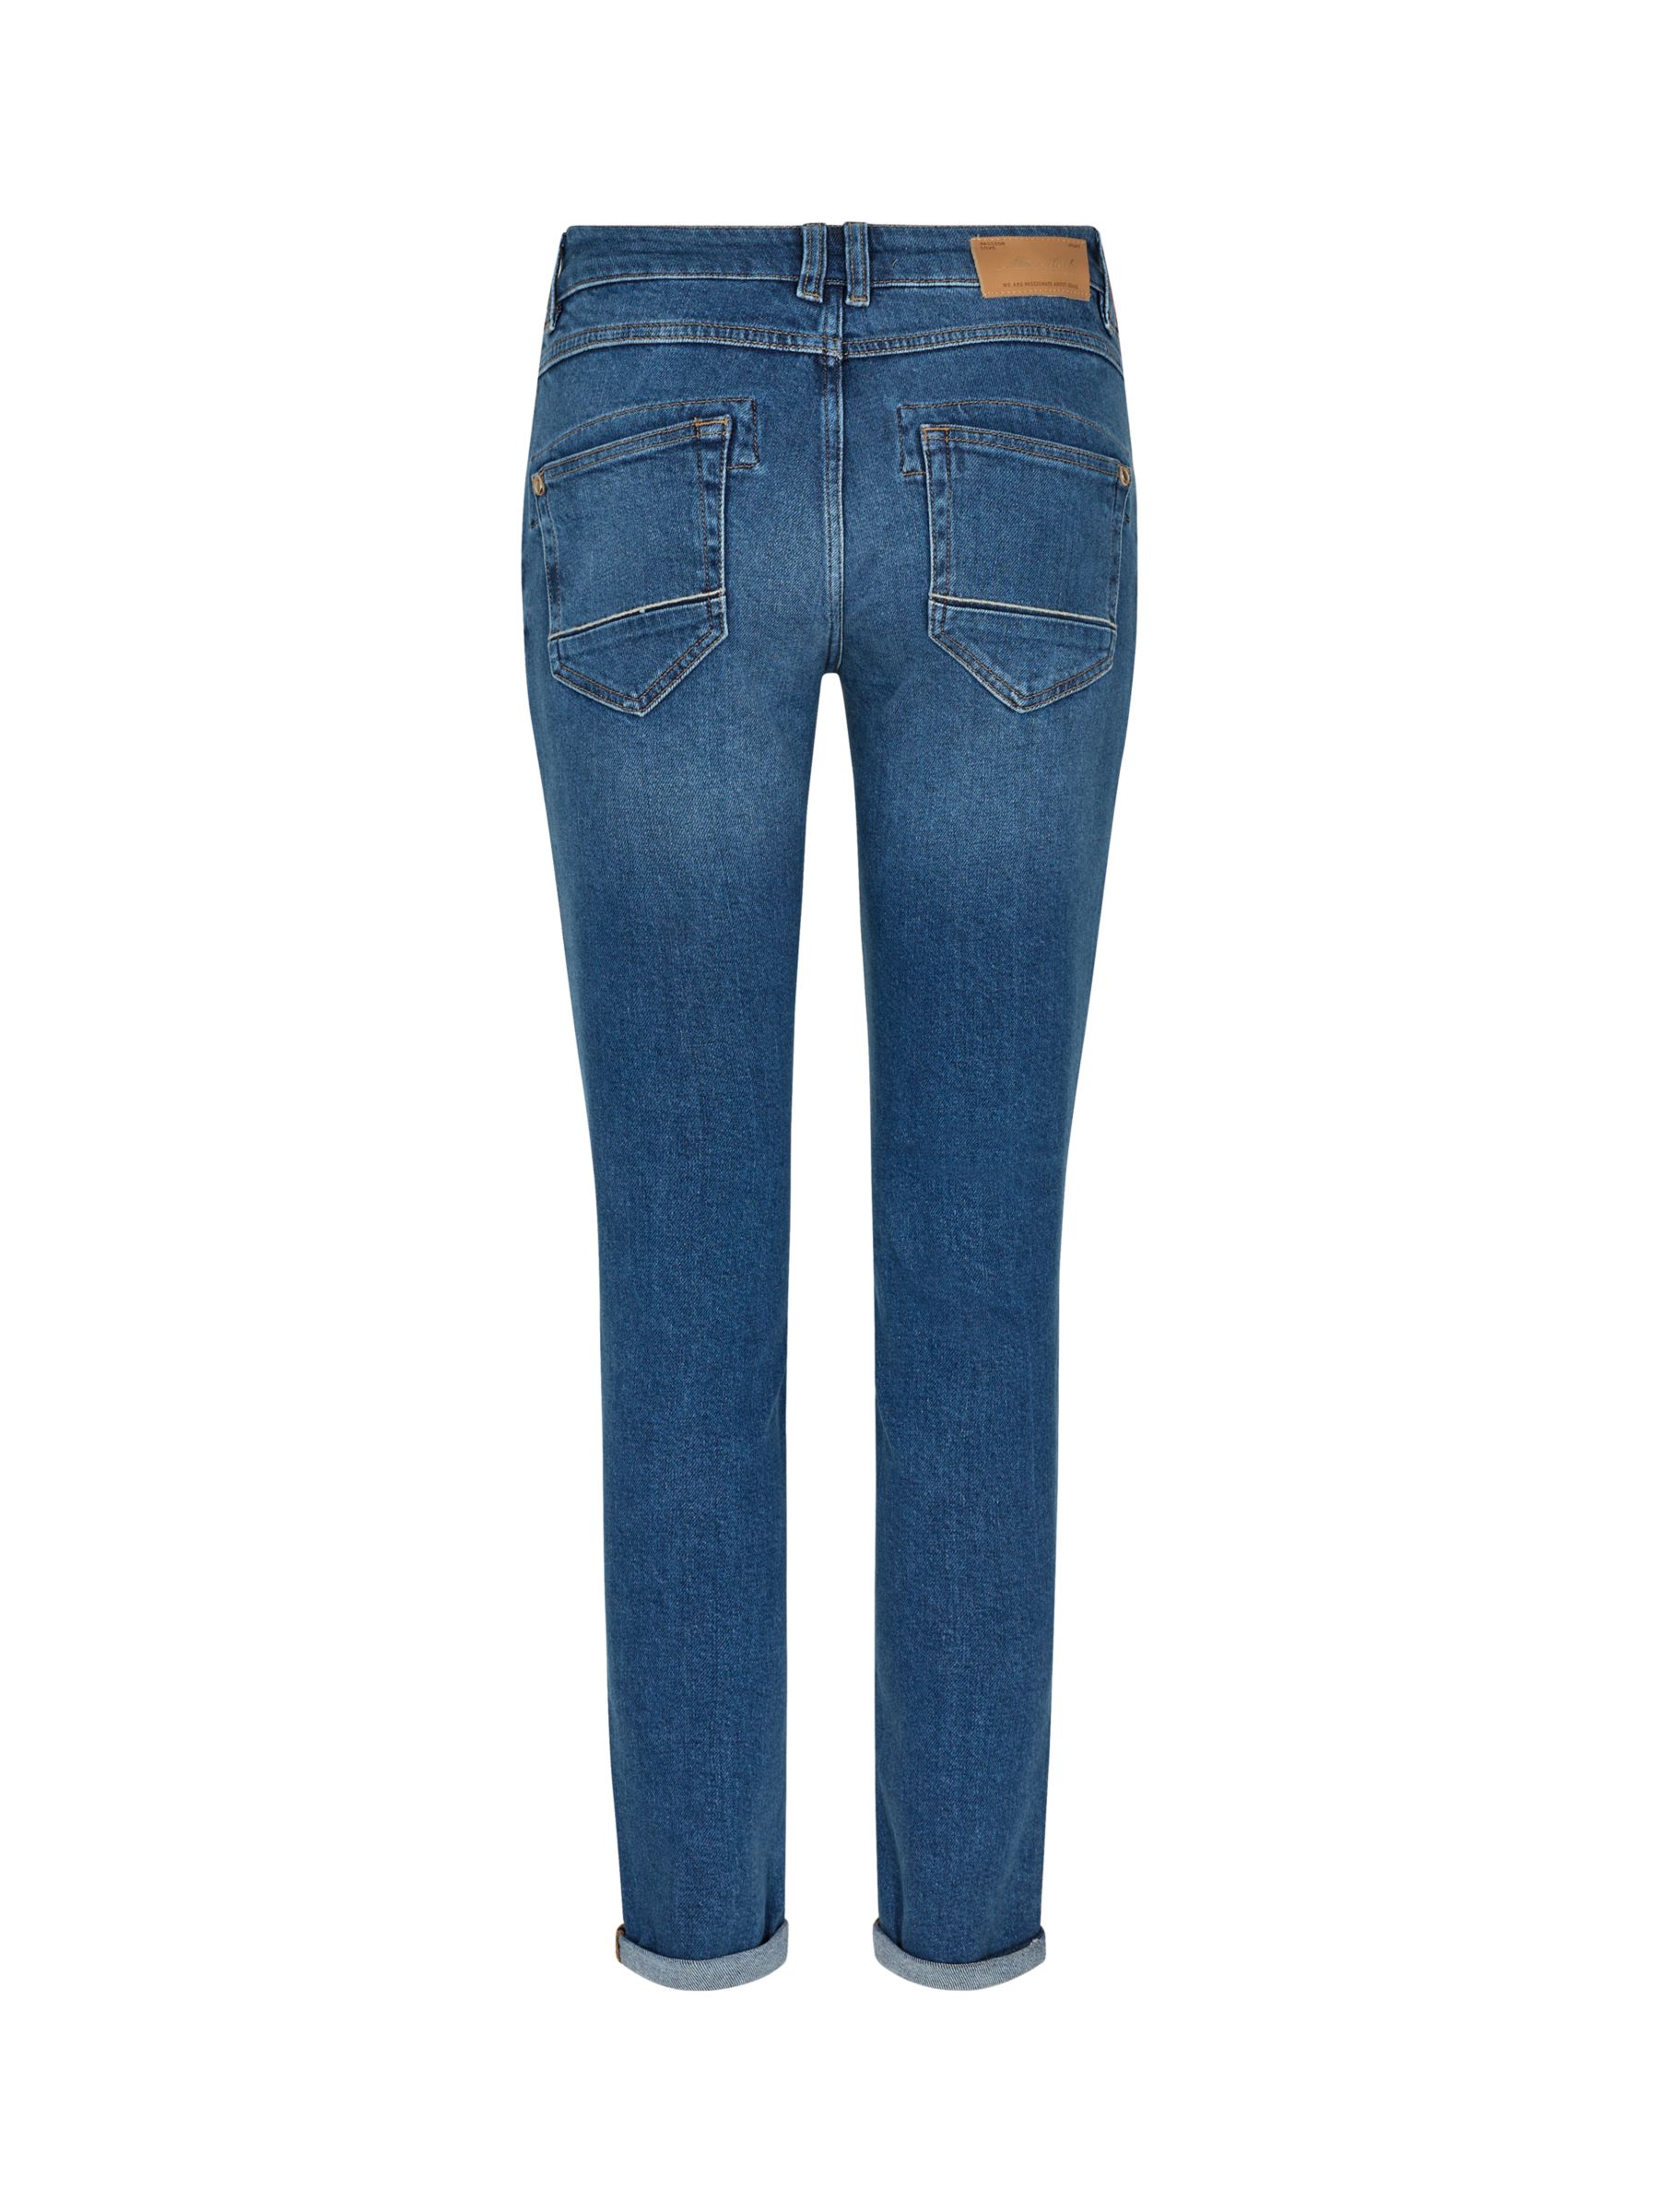 MOS MOSH Naomi Adorn Stretch Jeans, Mid Blue at John Lewis & Partners